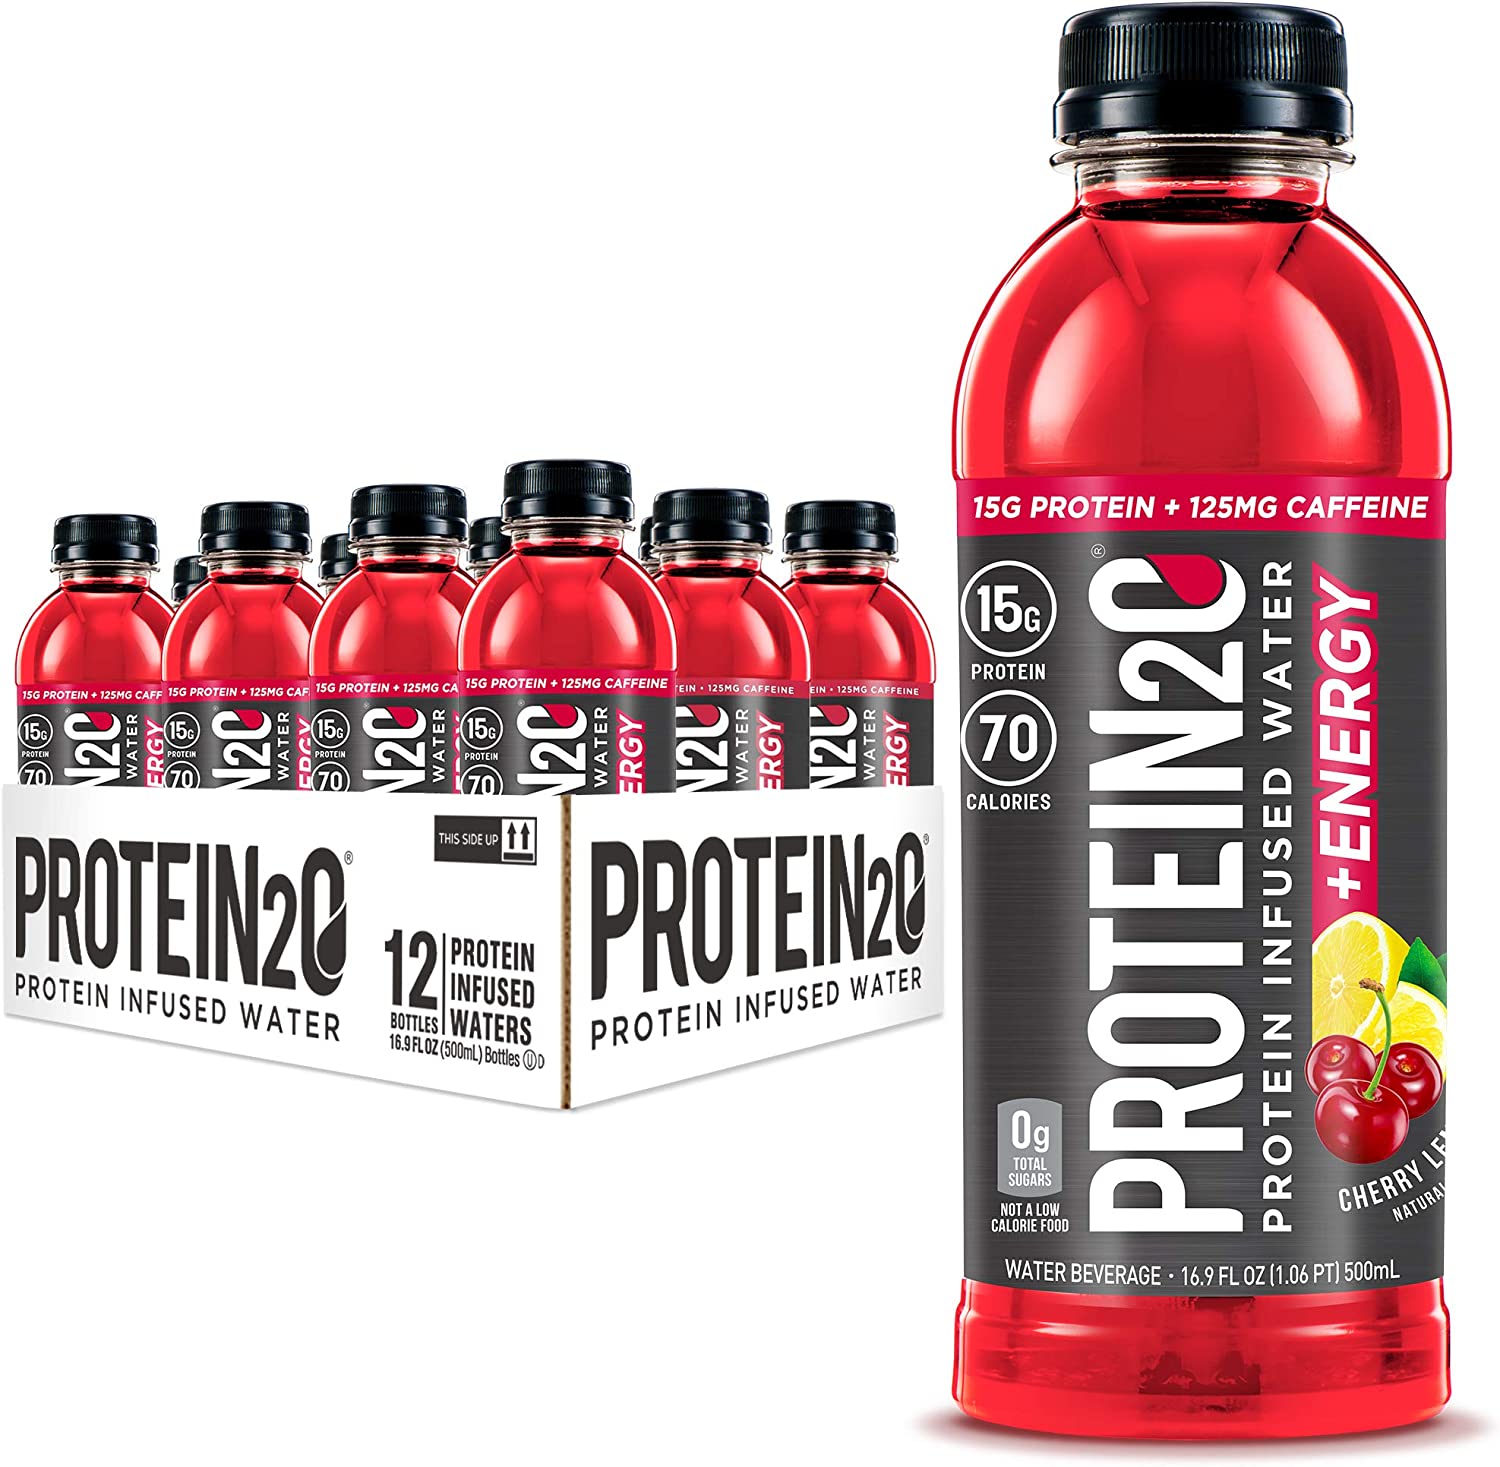 Protein2o - Eau infusée de protéines - Limonade à la cerise + Energie - CAISSE DE 12 || Protein2o - Protein infused water - Cherry Lemonade + Energy - BOX OF 12 Protein2o